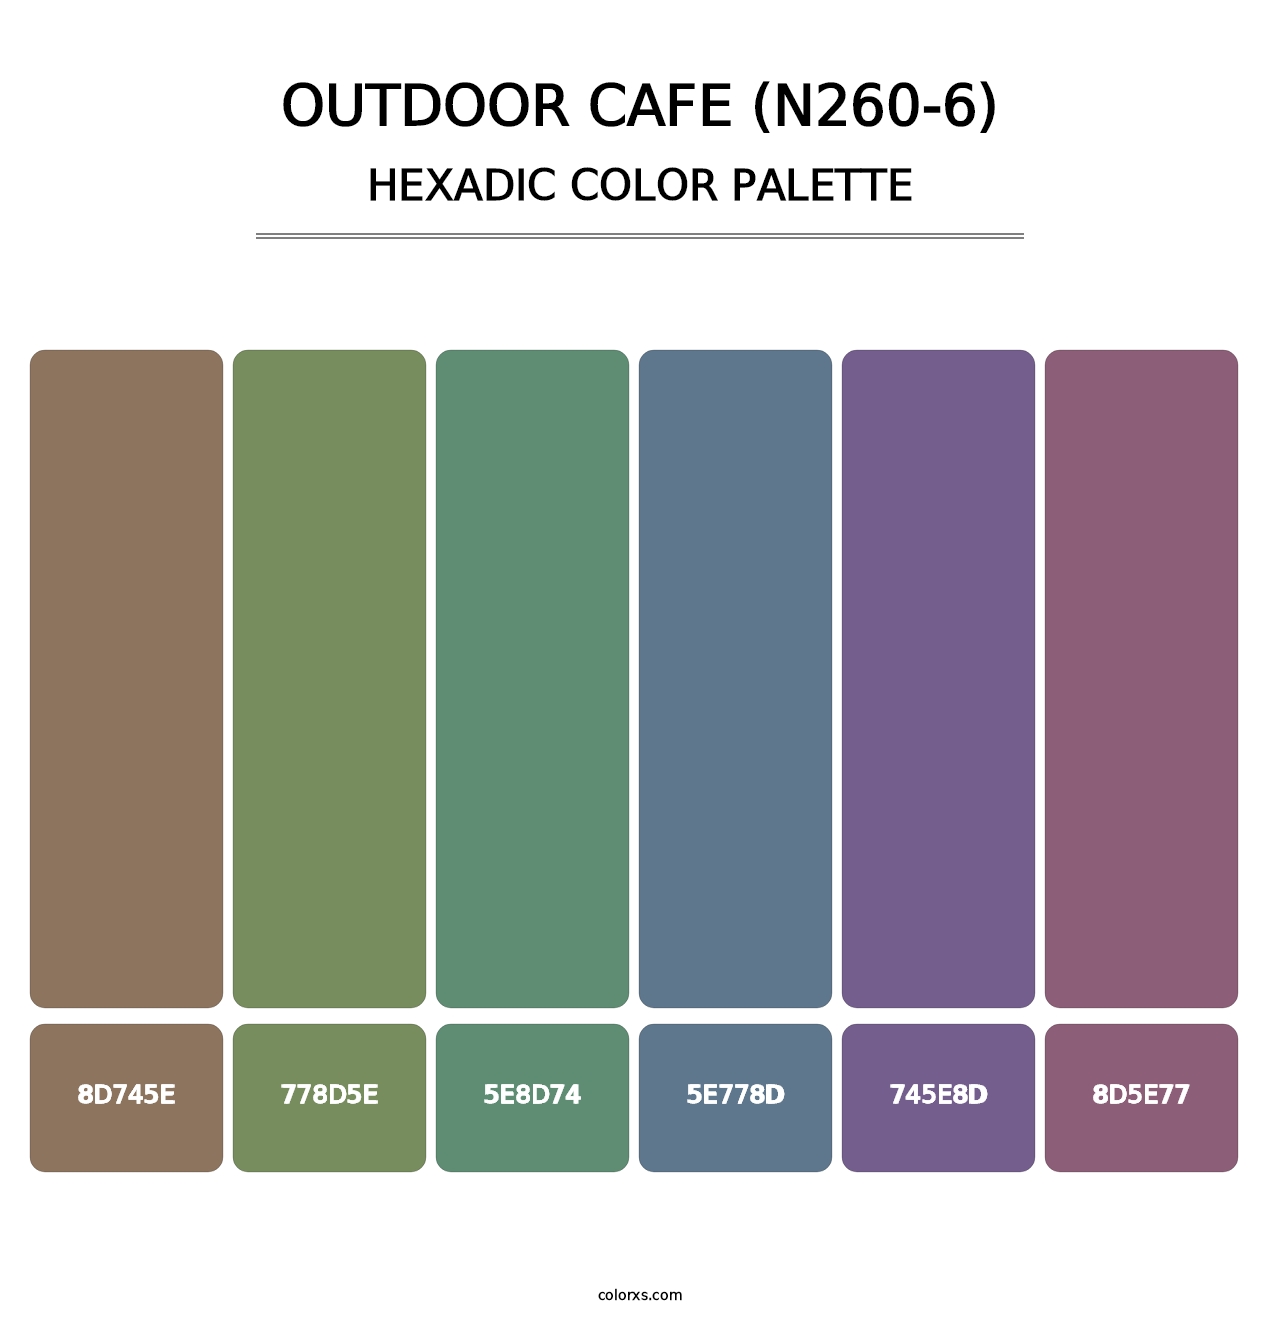 Outdoor Cafe (N260-6) - Hexadic Color Palette